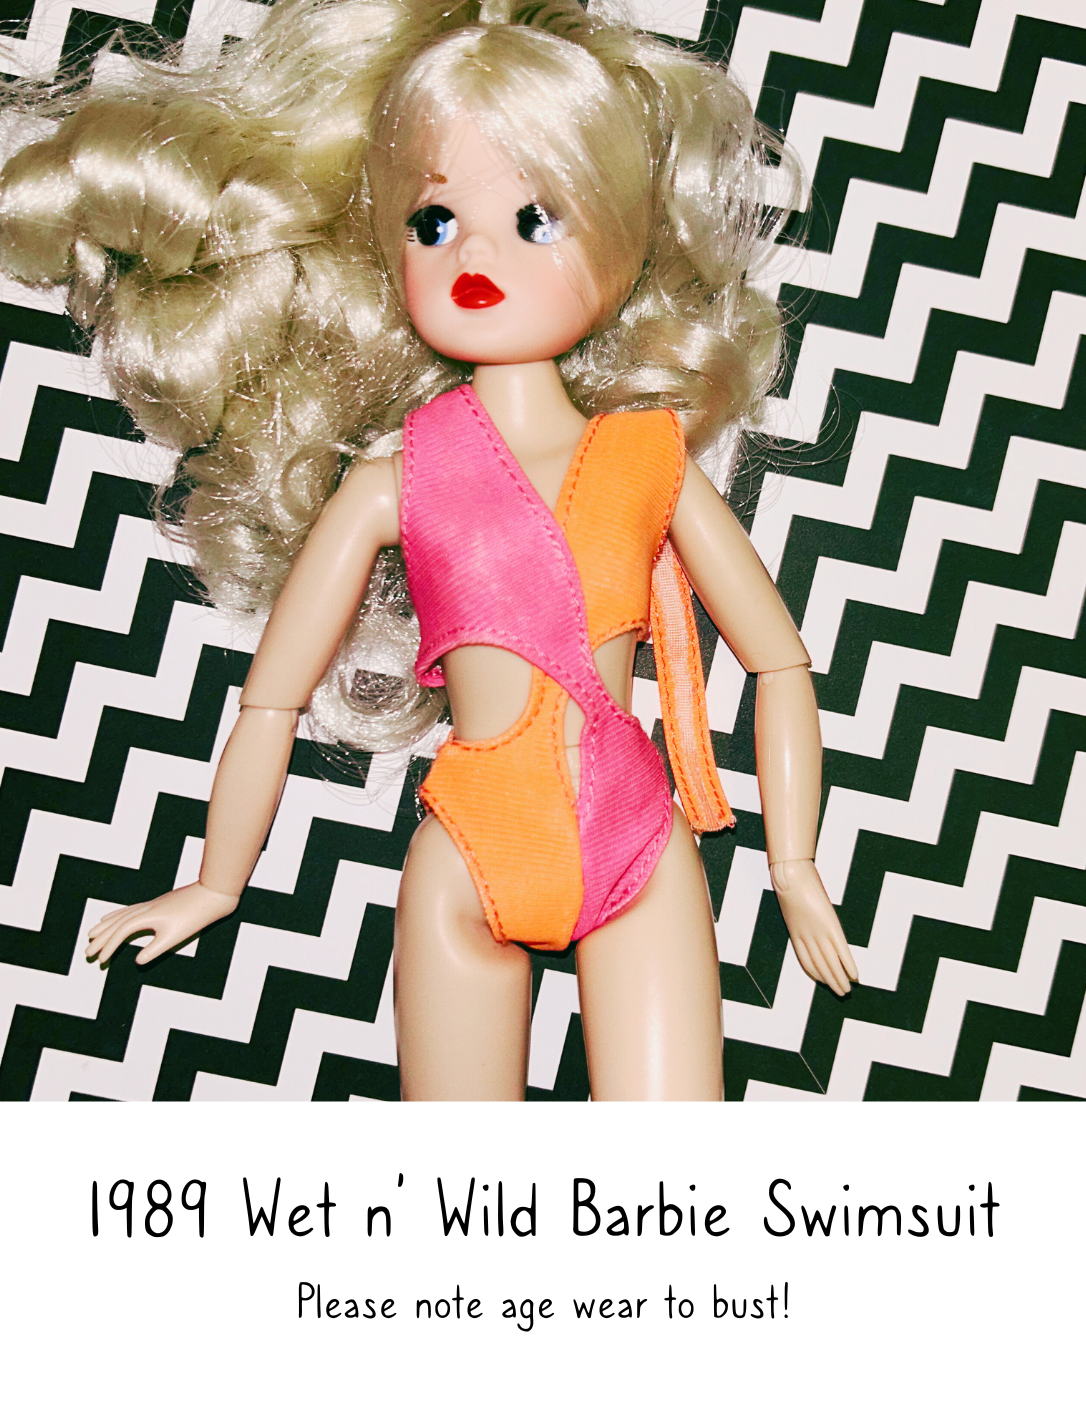 1989 Wet n' Wild Barbie Swimsuit